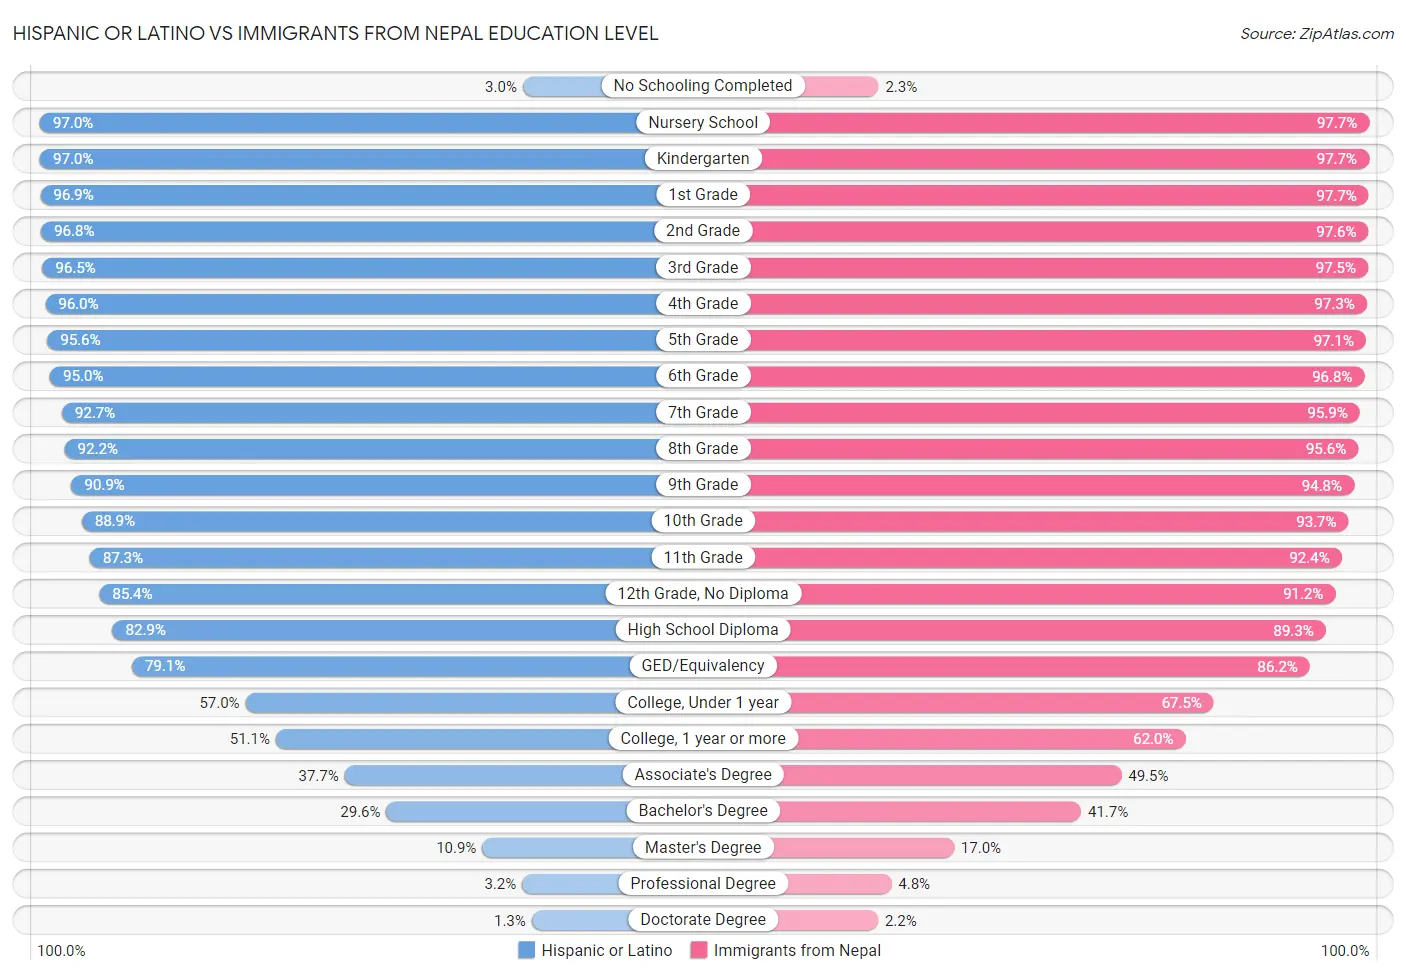 Hispanic or Latino vs Immigrants from Nepal Education Level